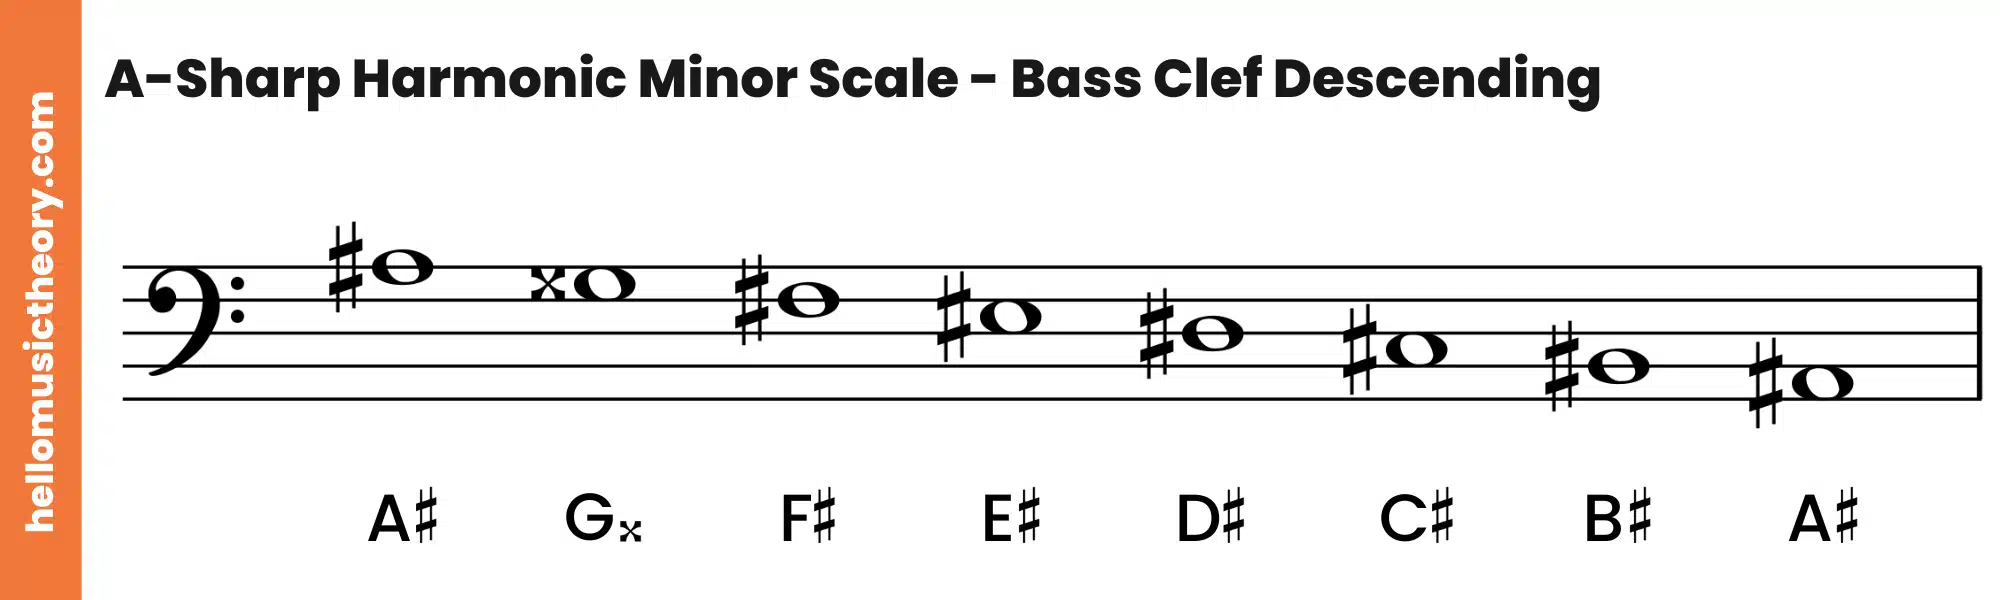 A-Sharp Harmonic Minor Scale Bass Clef Descending